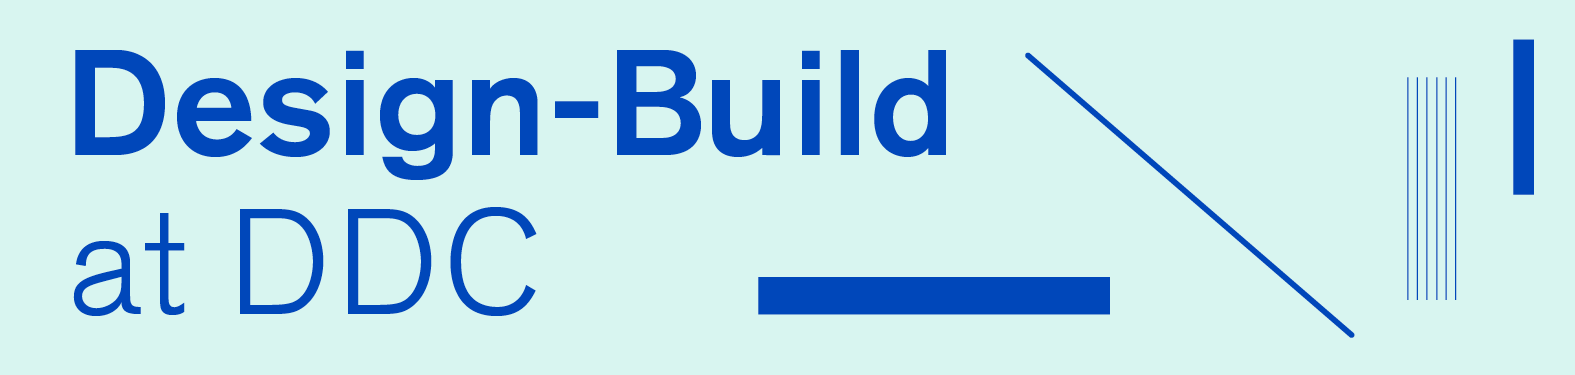 Design Build banner